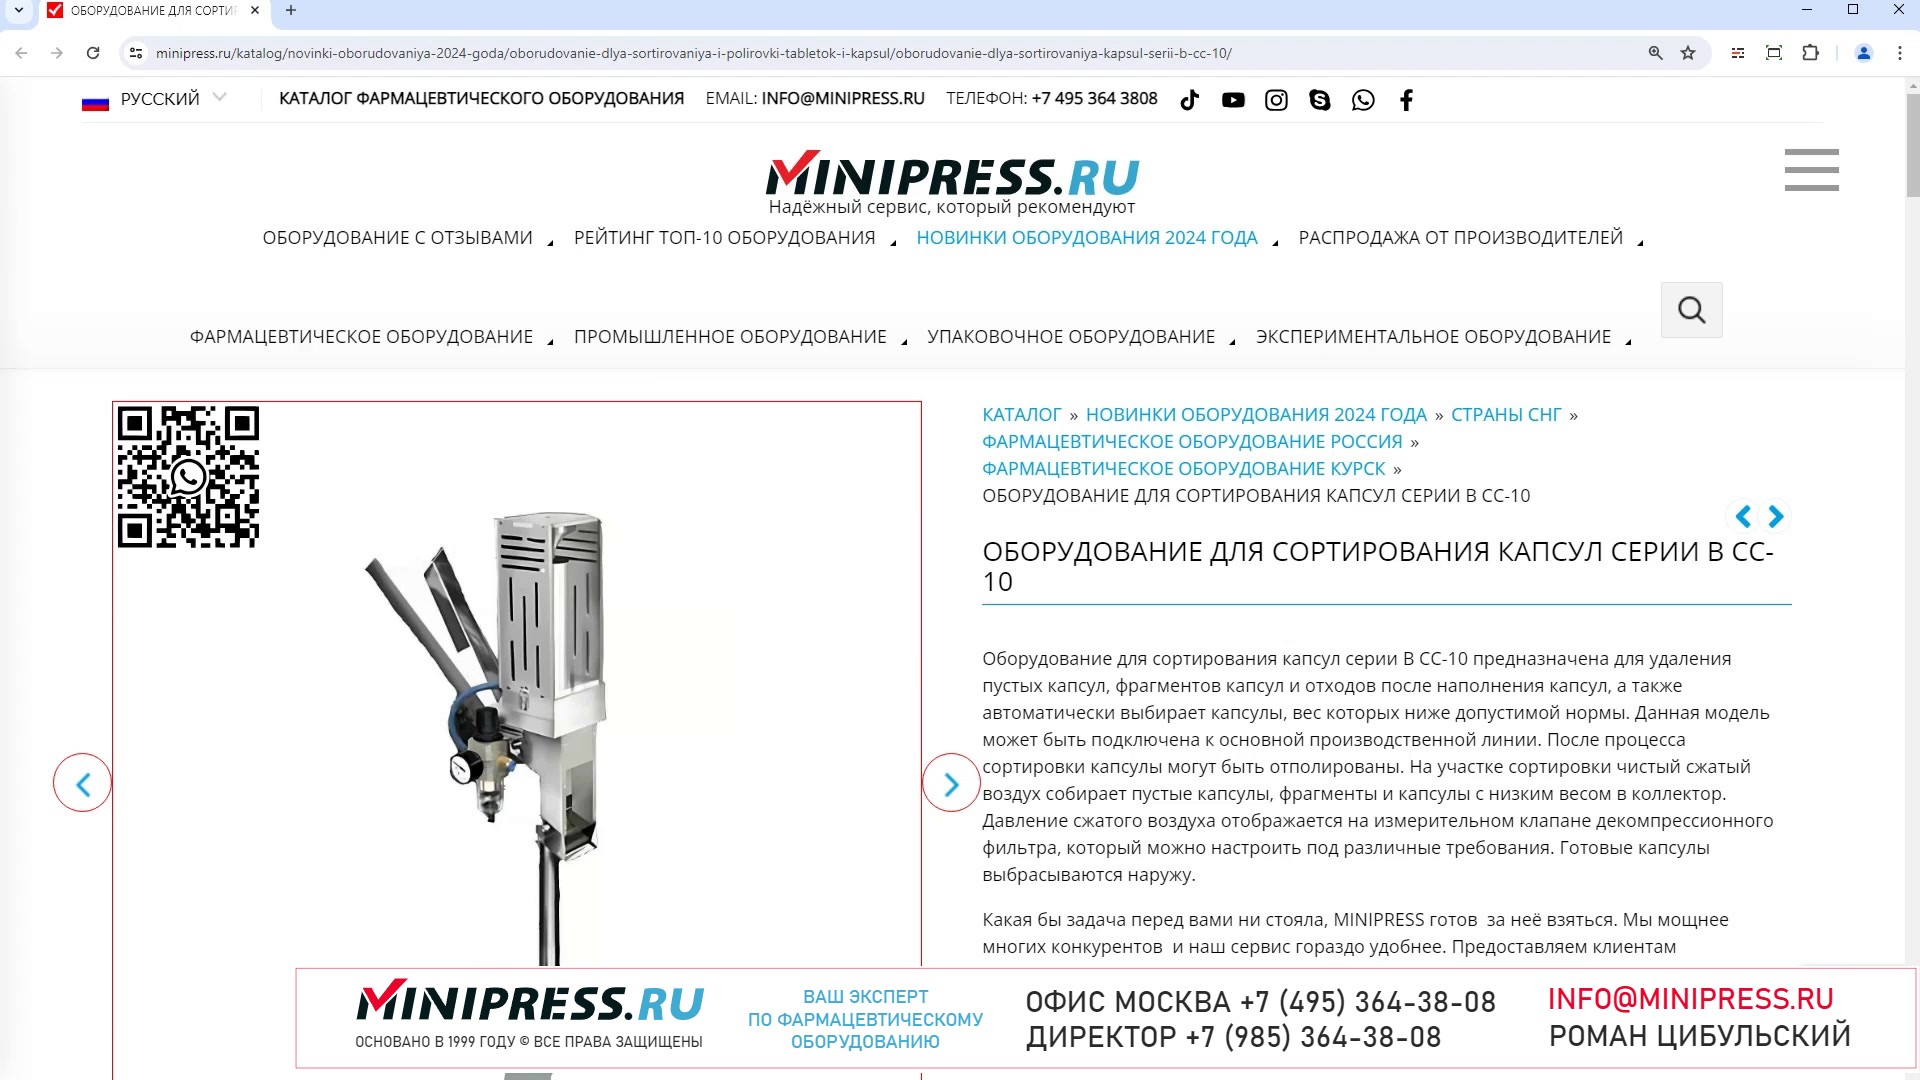 Minipress.ru Оборудование для сортирования капсул серии B CC-10